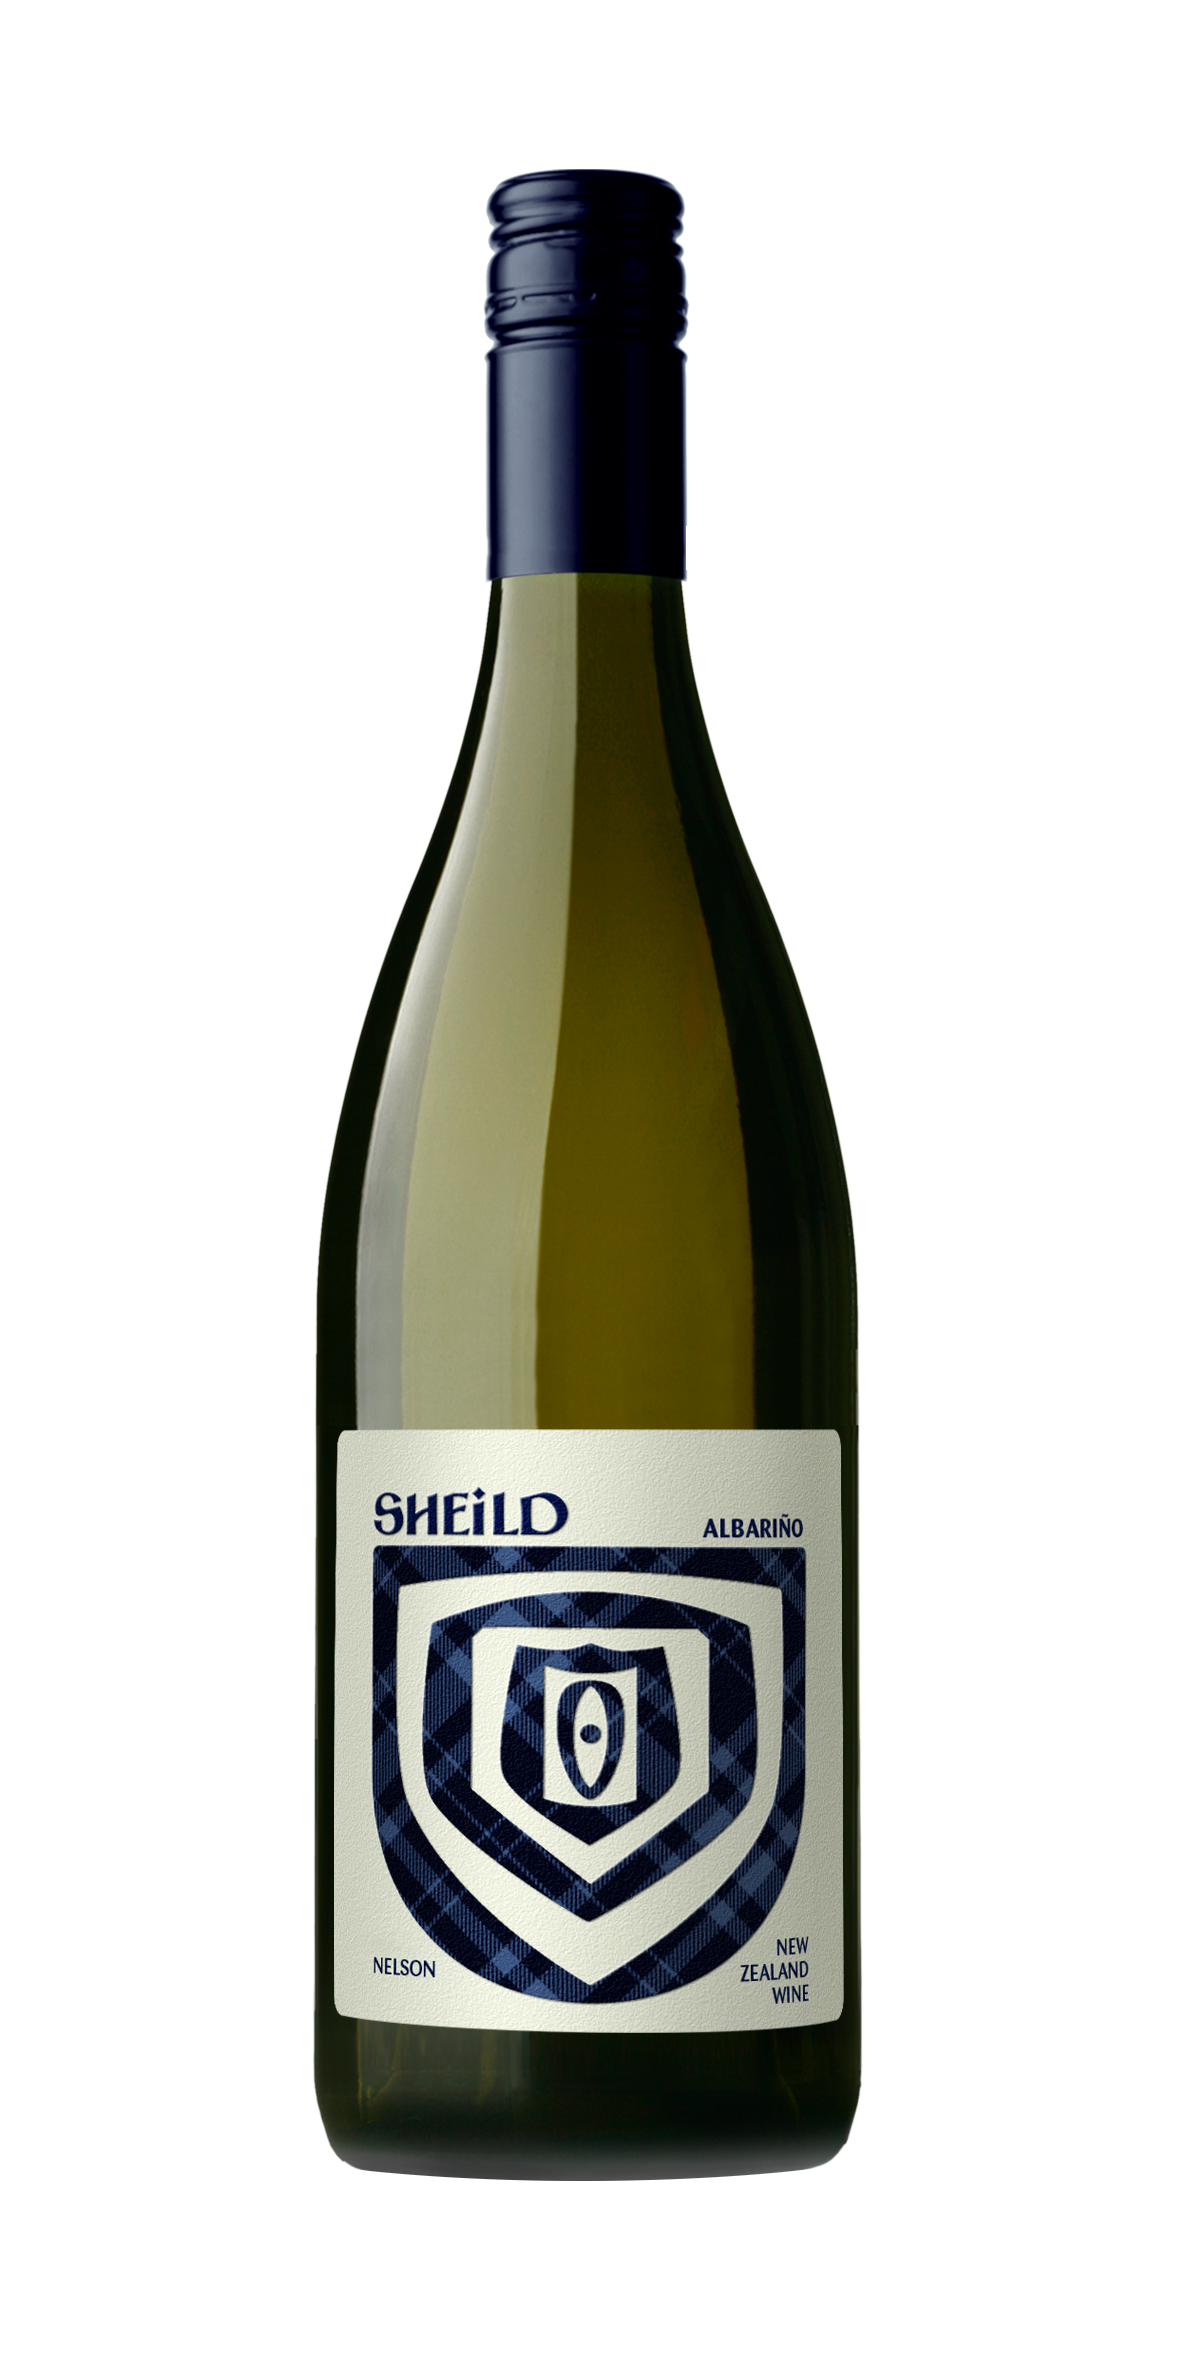 Bottle of SHEiLD's Albariño wine, with light green label and dark blue cap/logo.